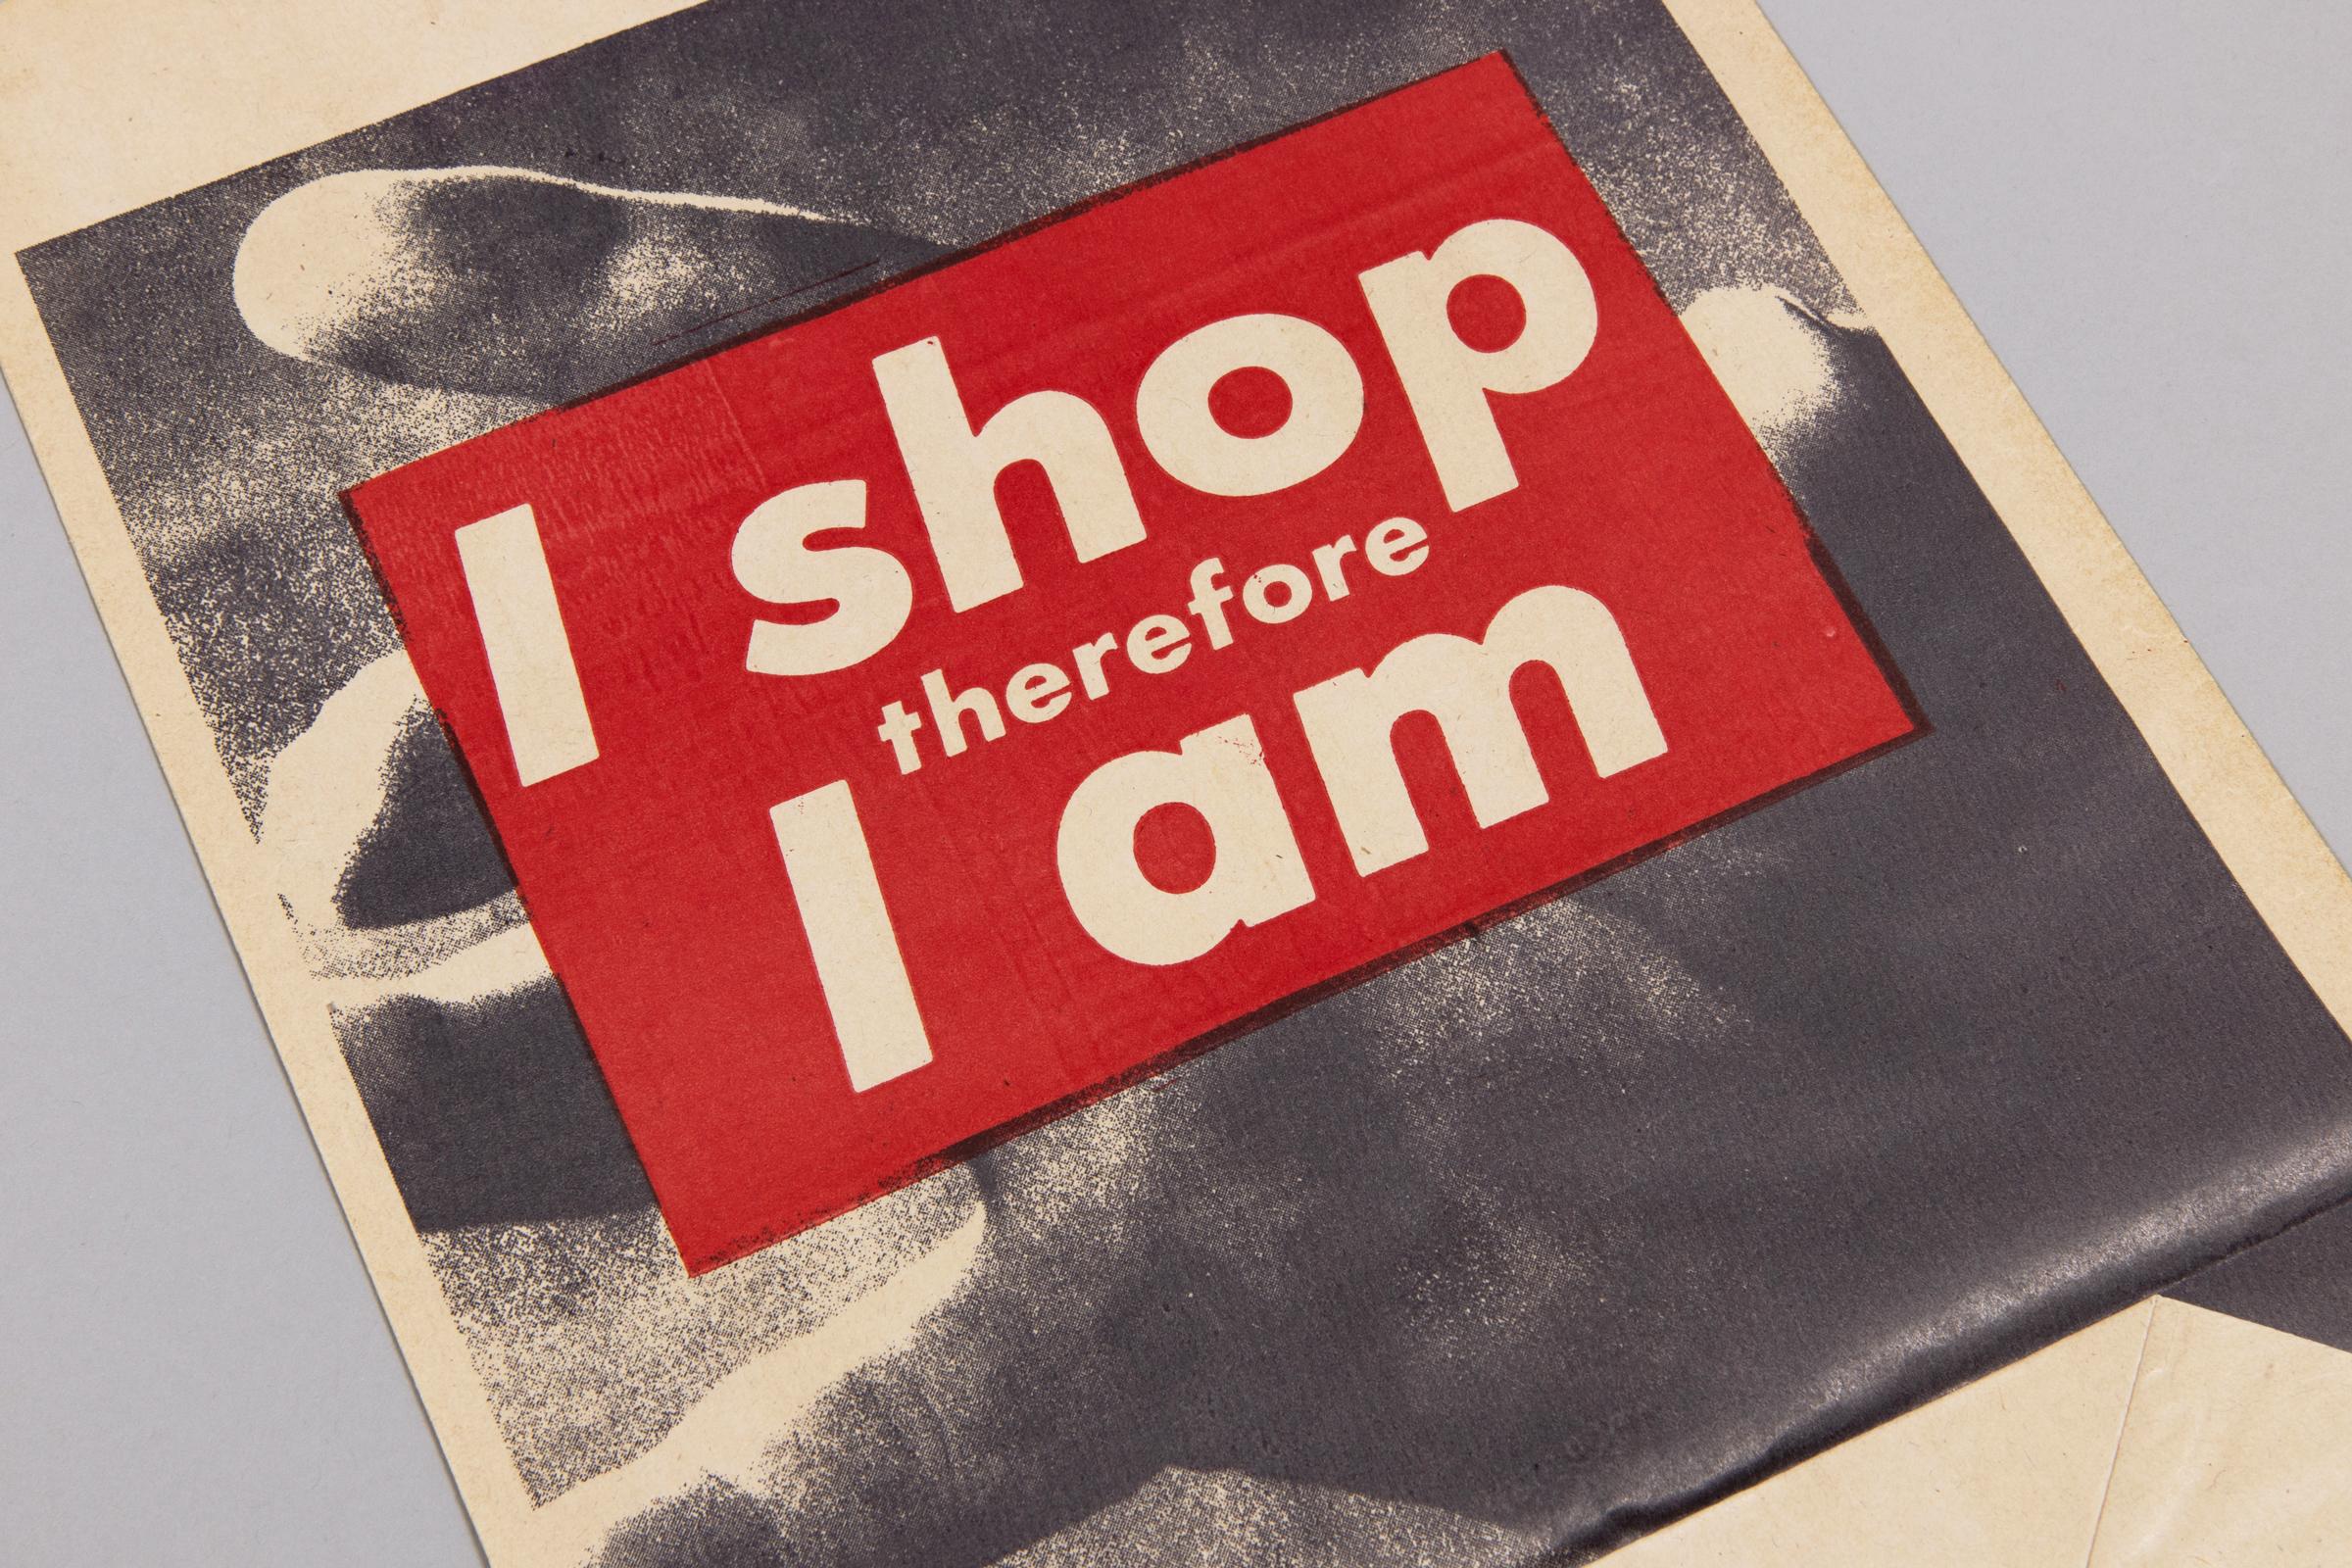 Barbara Kruger (1945, American)
I Shop Therefore I Am, 1990
Medium: Photolithograph on paper shopping bag
Edition size: 9000
Dimensions: 17 5/16 x 10 3/4 in (43.9 x 27.3 cm)
Publisher: Kölnischer Kunstverein, Cologne
Printer: Zechel & Co. GmbH,